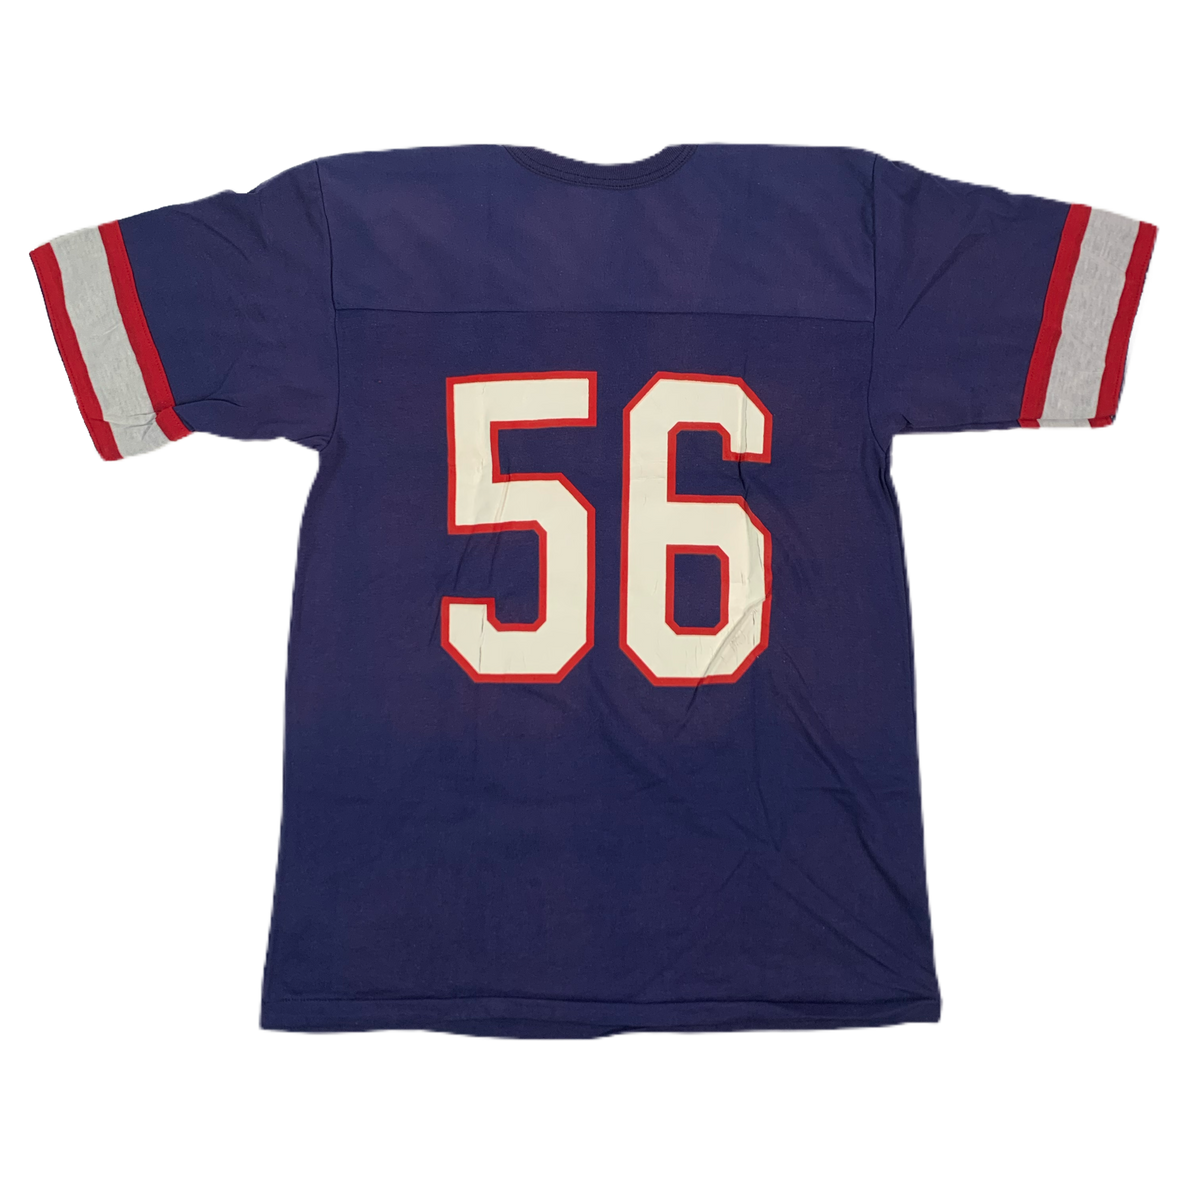 Vintage New York Giants “Rawlings” Football Jersey - jointcustodydc